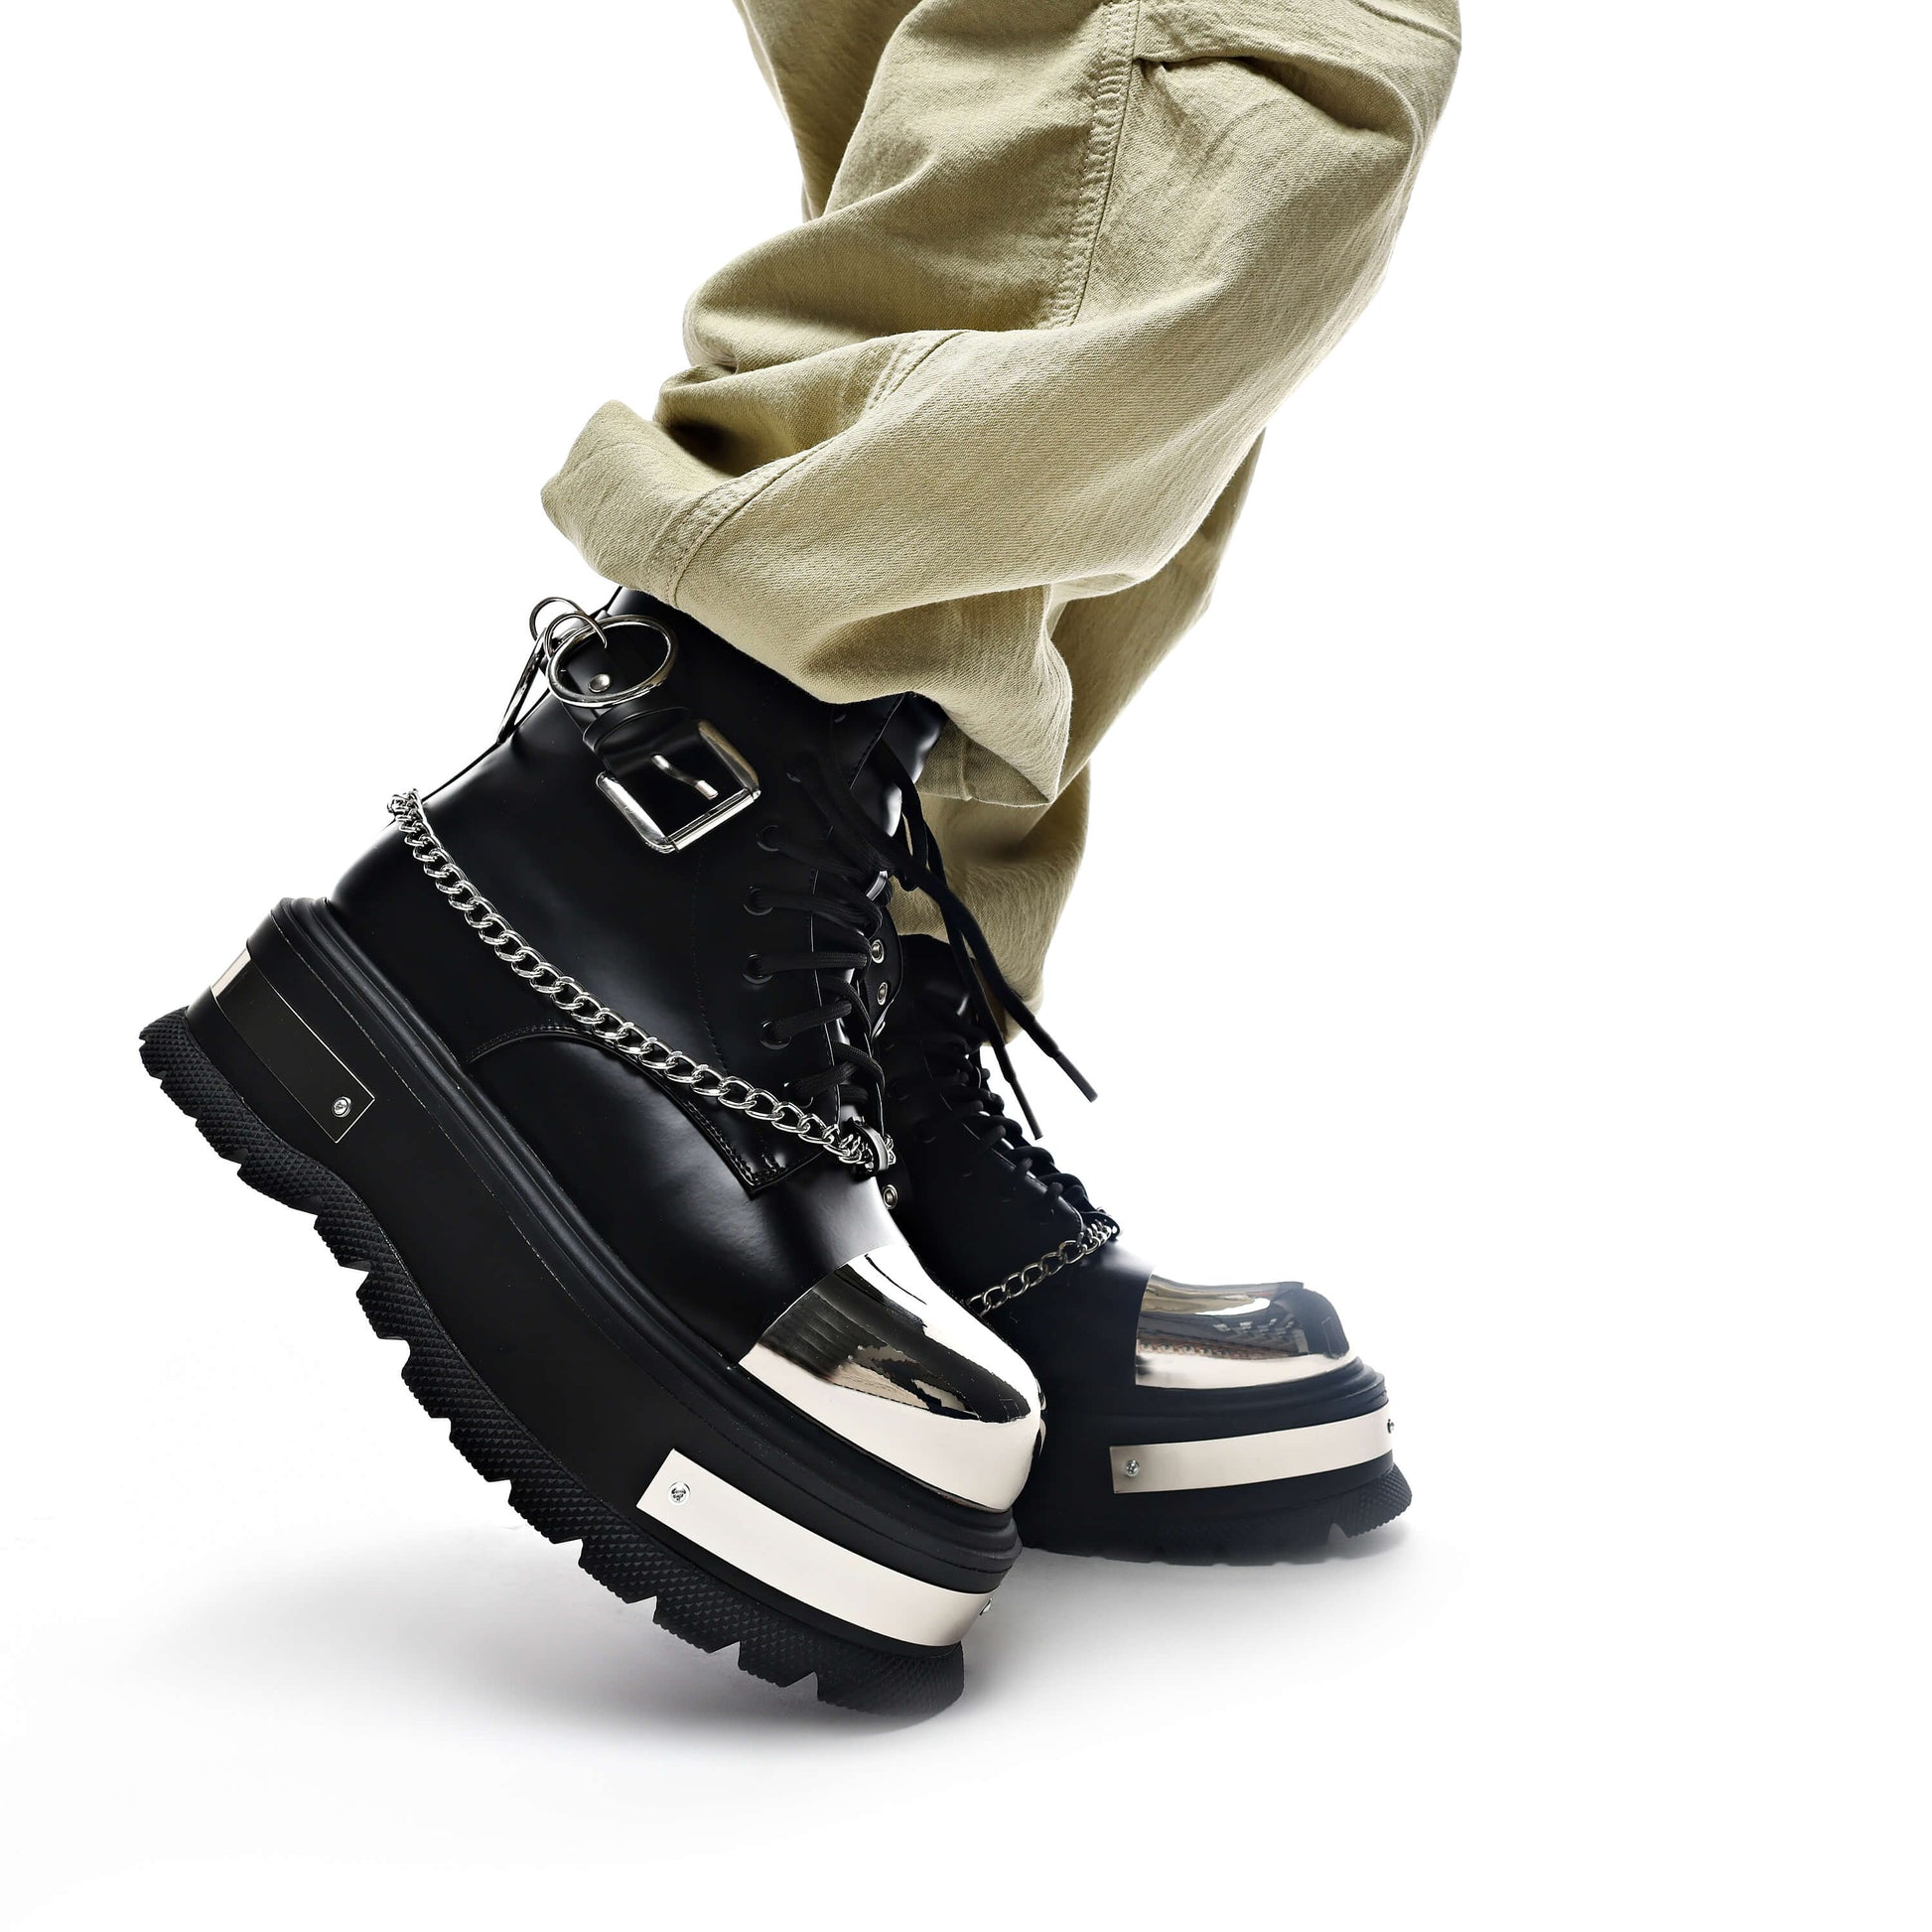 Borin Hardware Platform Boots - Ankle Boots - KOI Footwear - Black - Side View